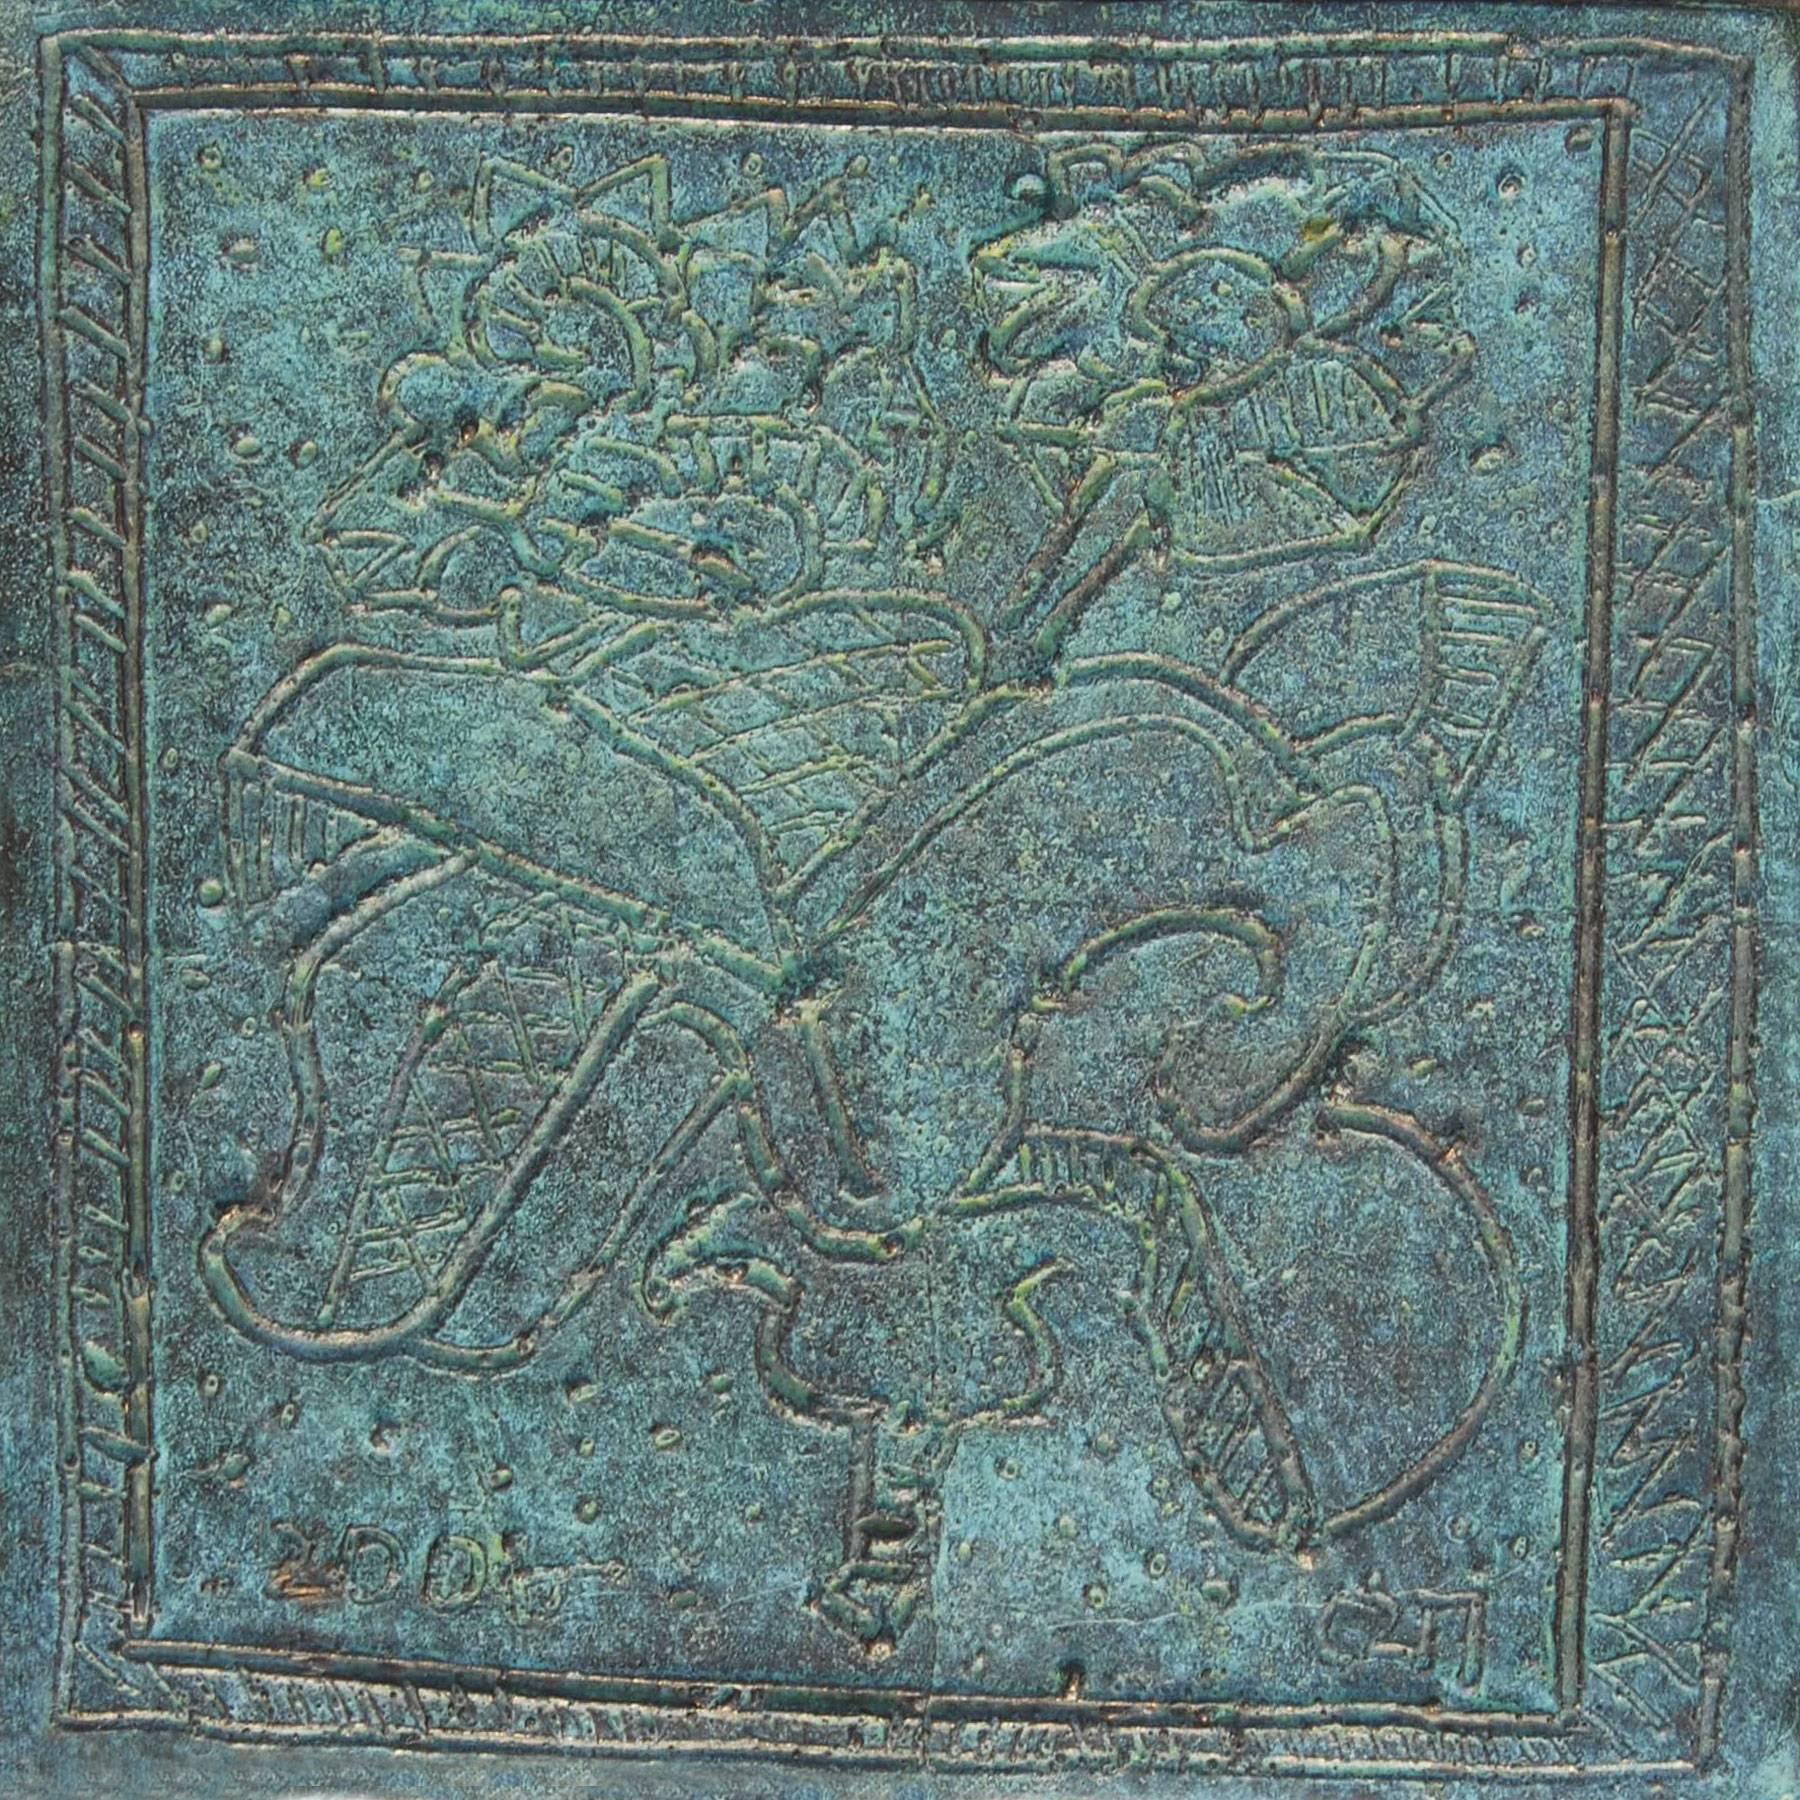 Flower Vase, Still Life, Bronze Plate, Green by Artist of 21st Century"In Stock"